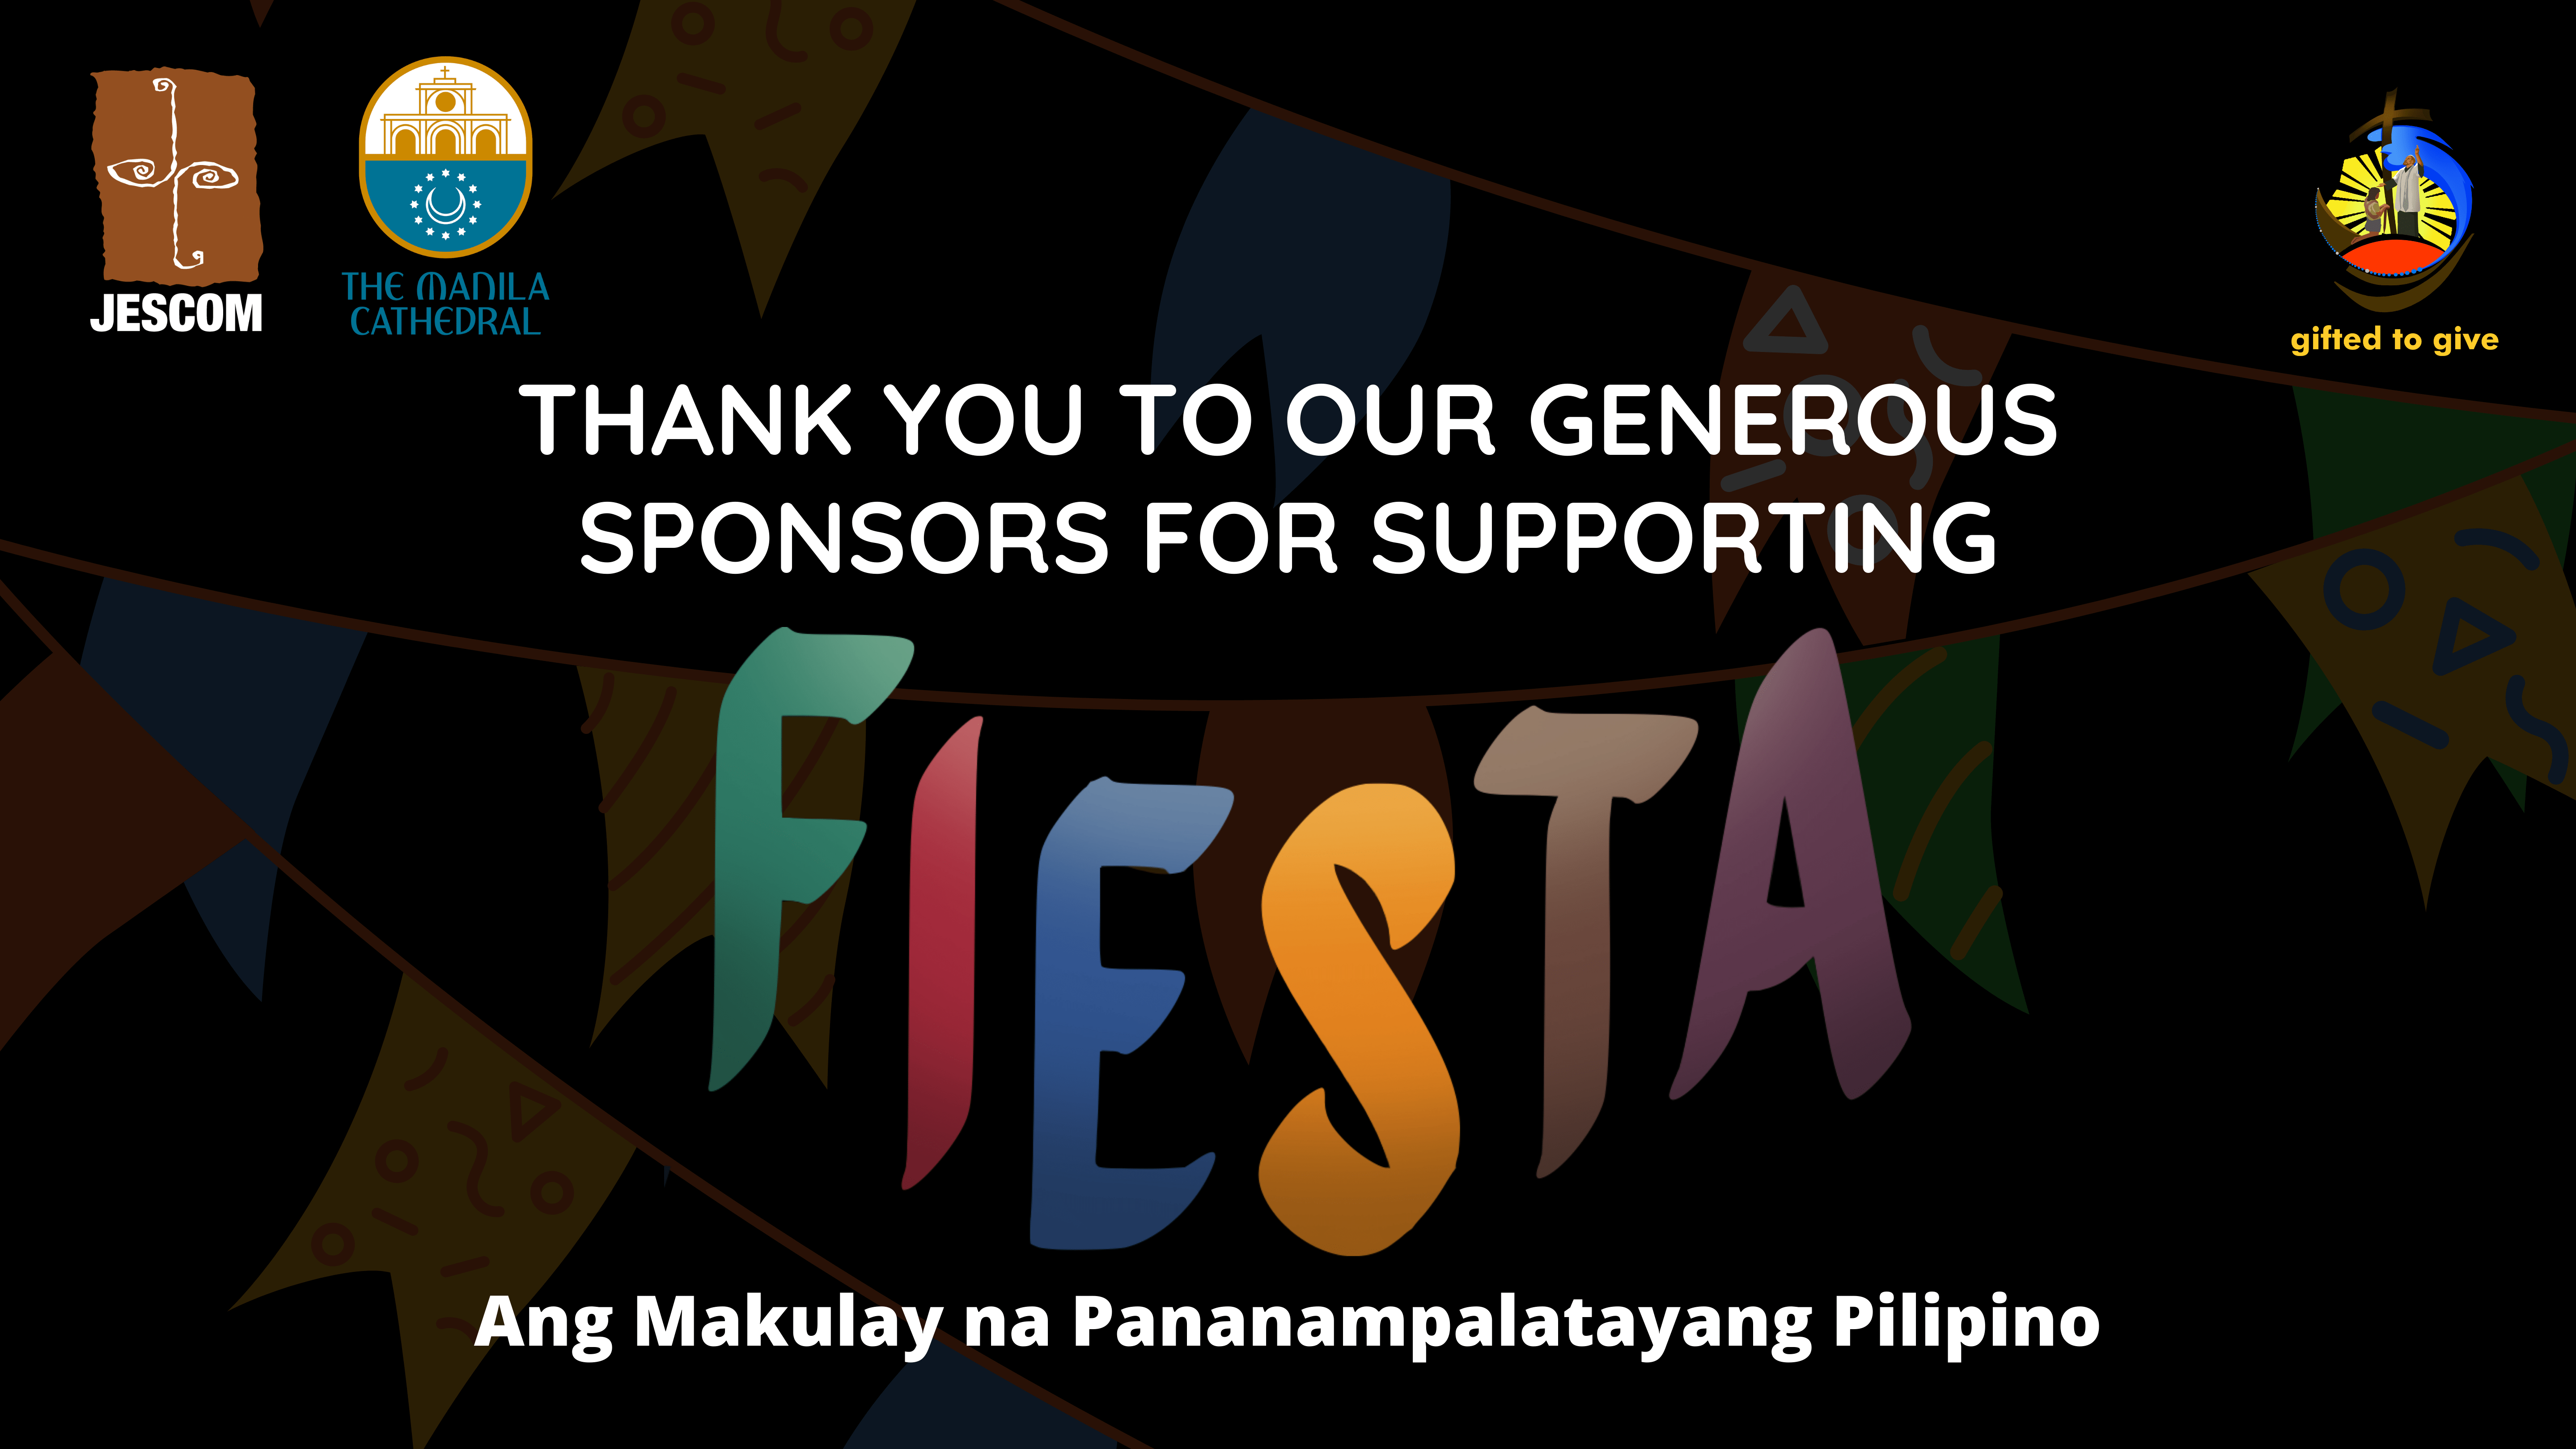 Thank You, “Fiesta” Sponsors!